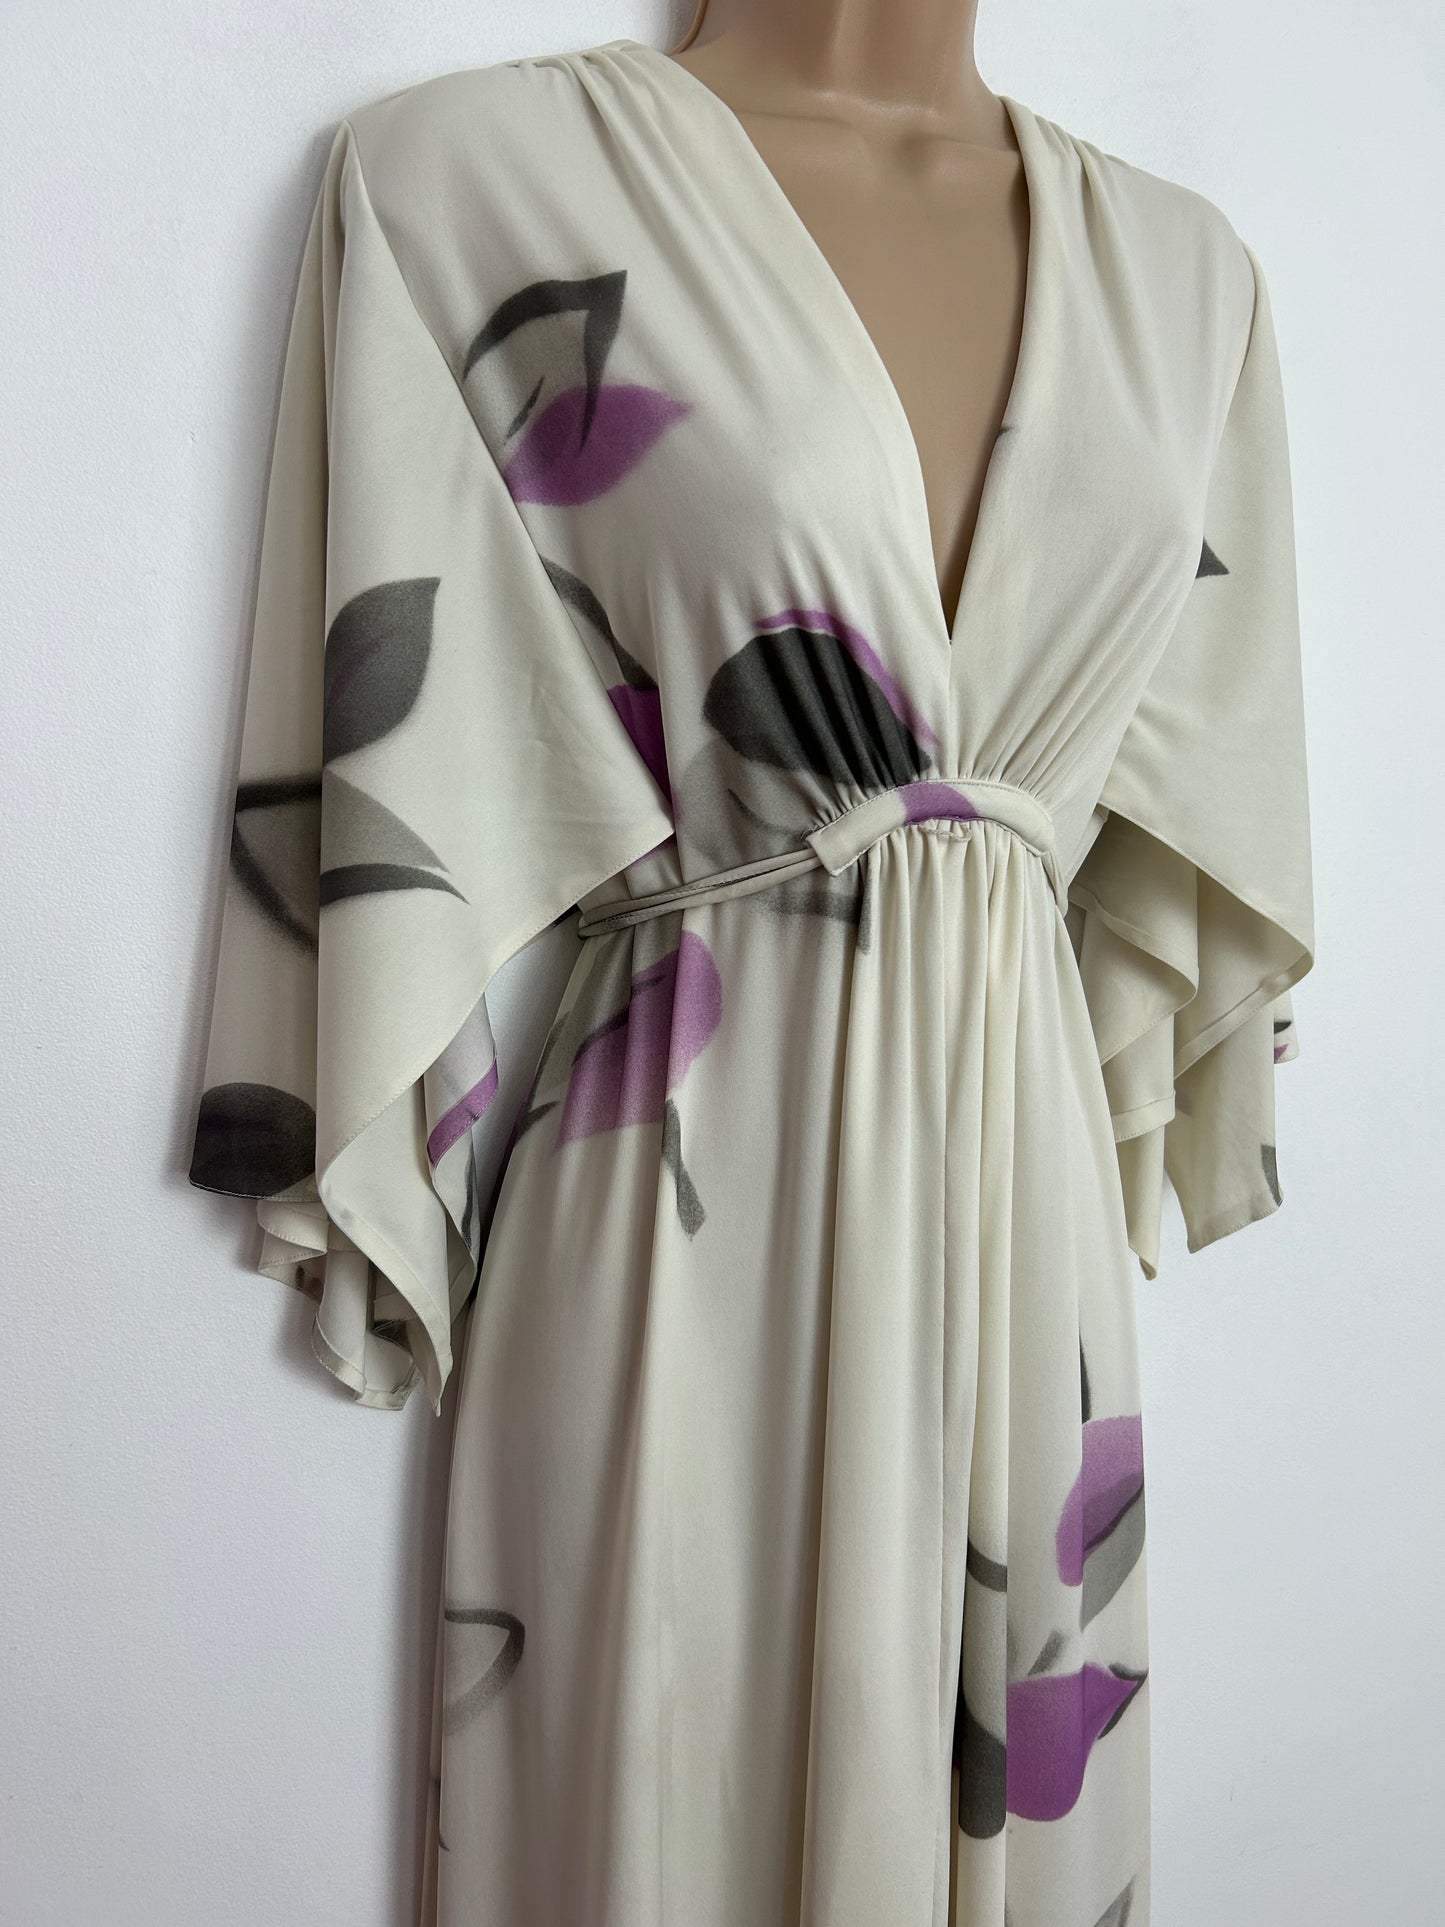 Vintage 1970s UK Size 12-14 Pretty Cream Grey & Purple Floral Print Hanky Sleeve Tie Back Maxi Dress